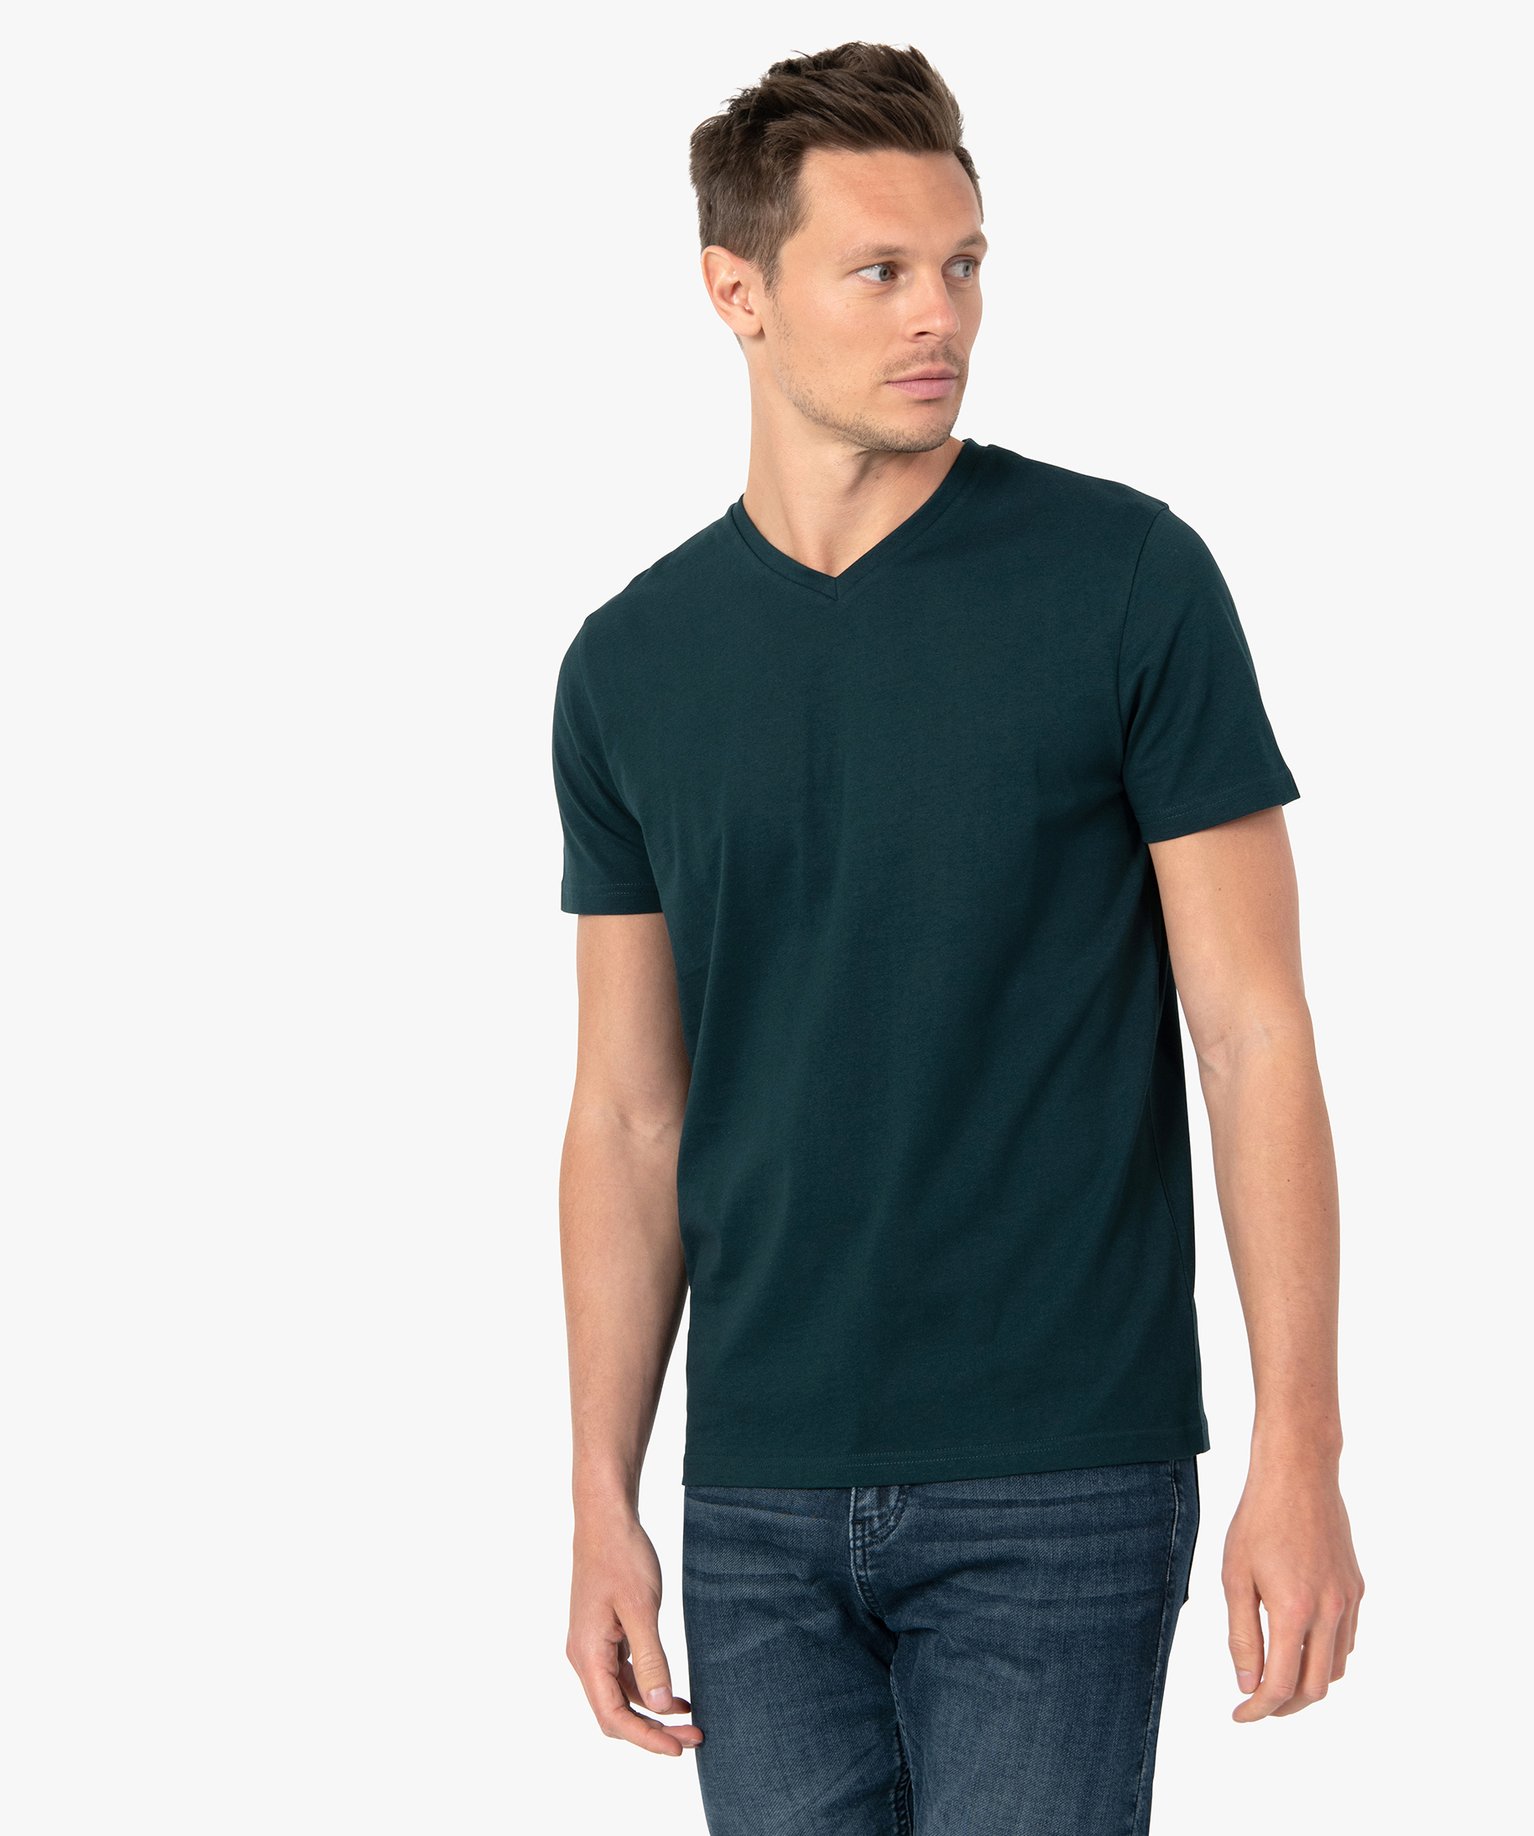 tee-shirt homme a manches courtes et col v vert tee-shirts